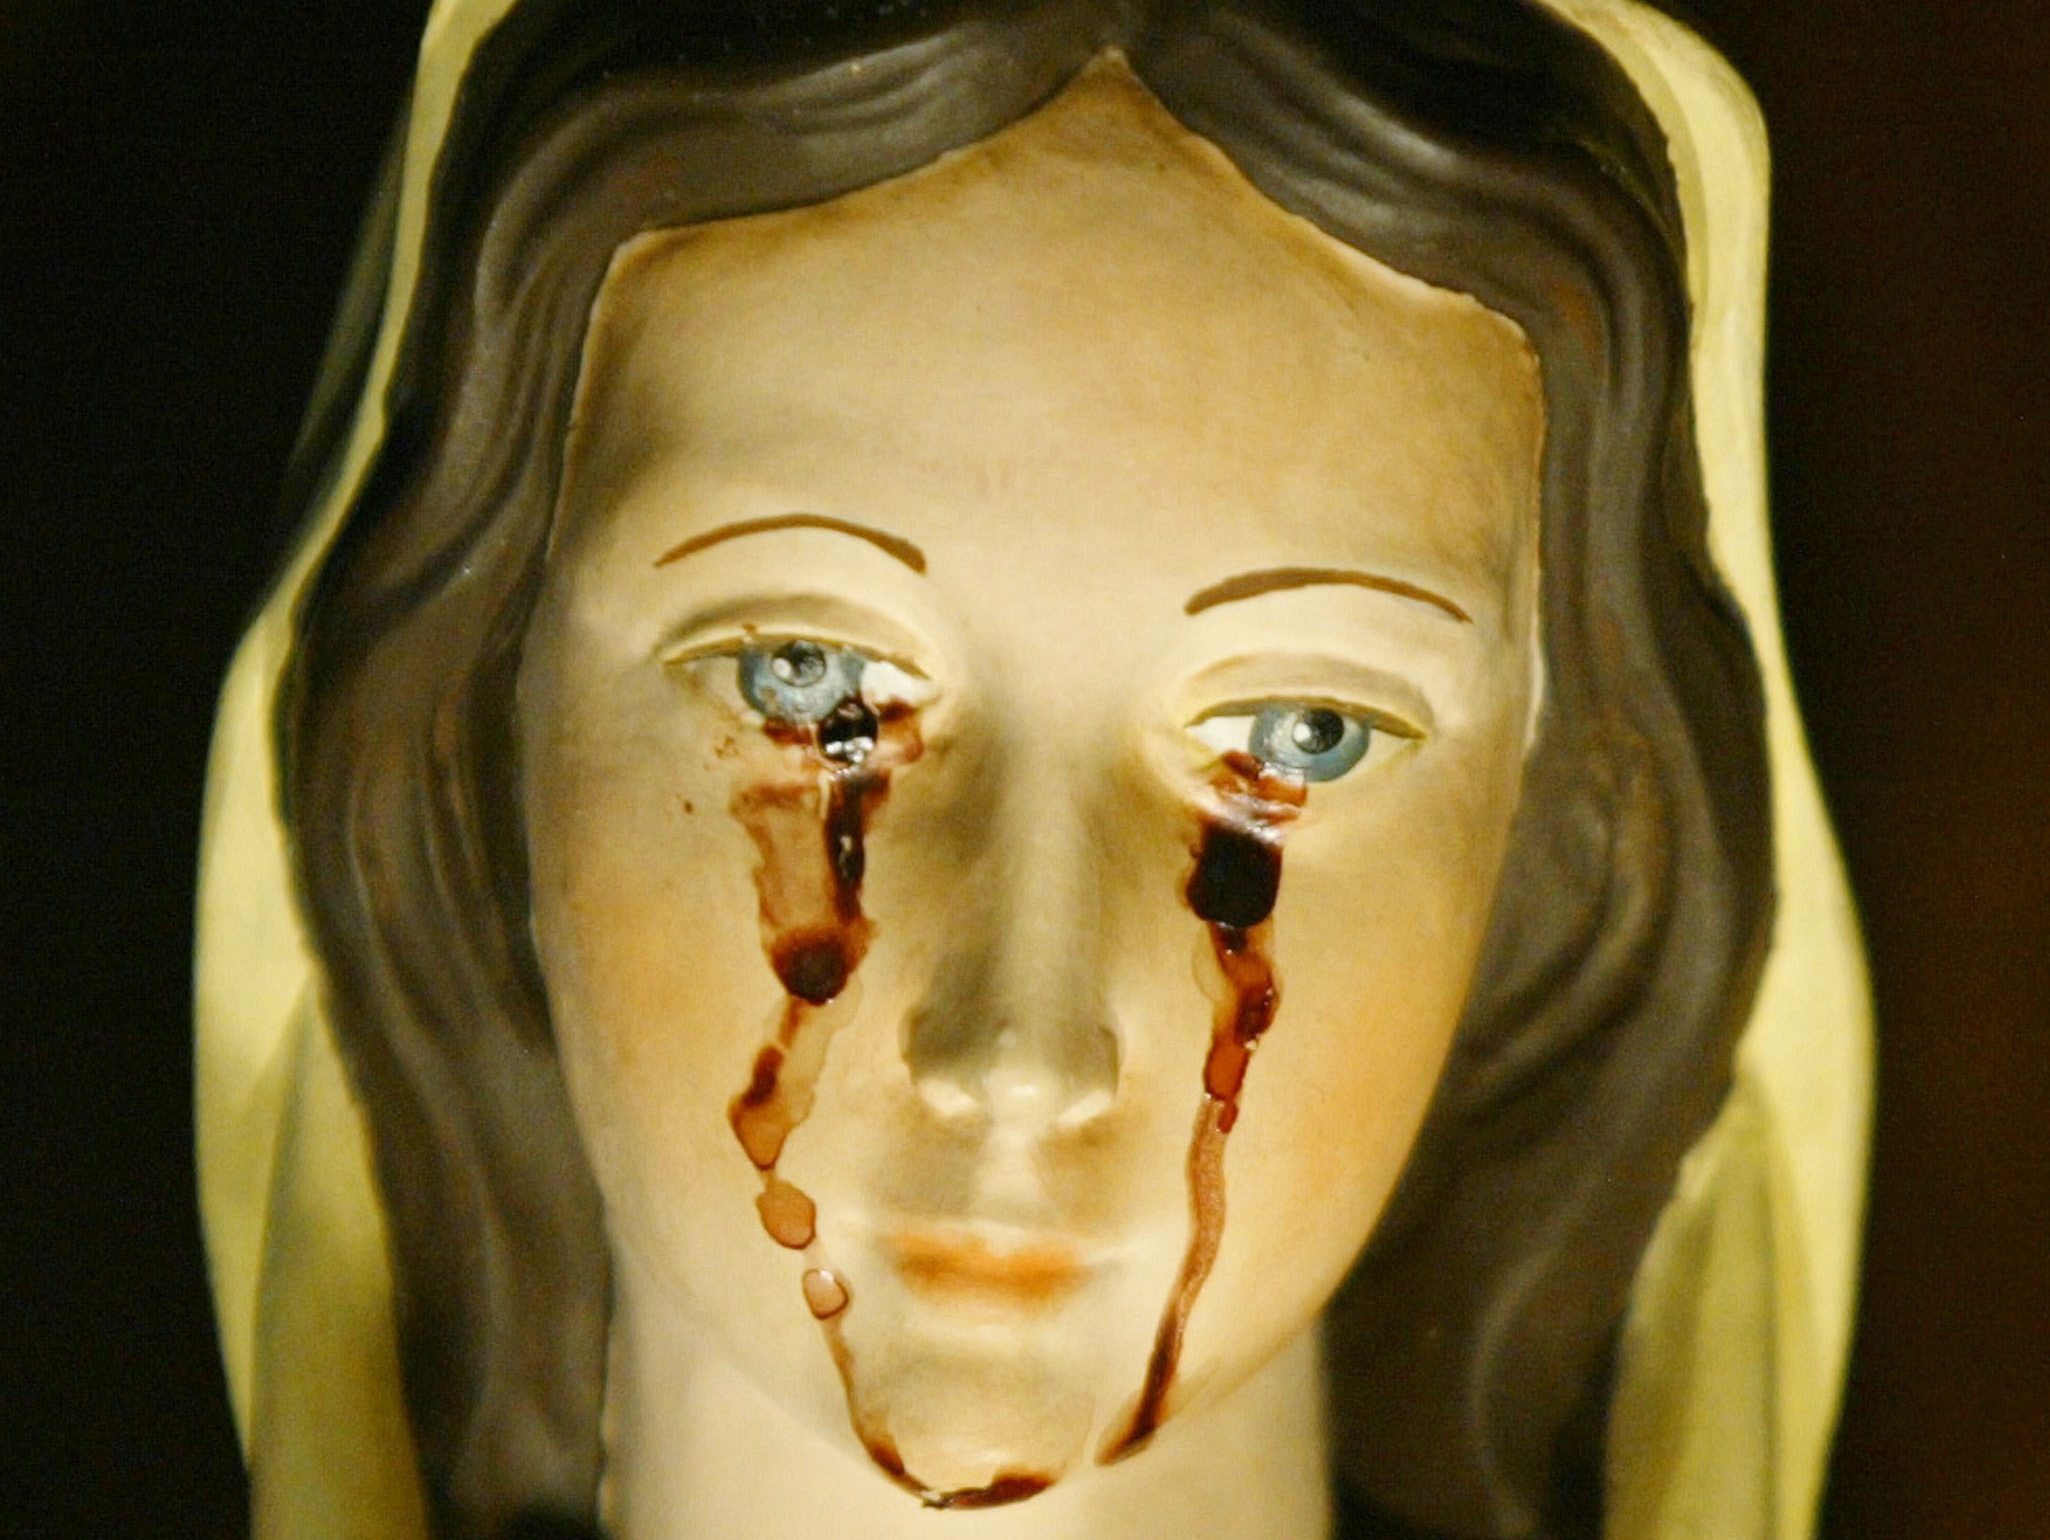 Virgin Mary Statue Said To Weep Tears